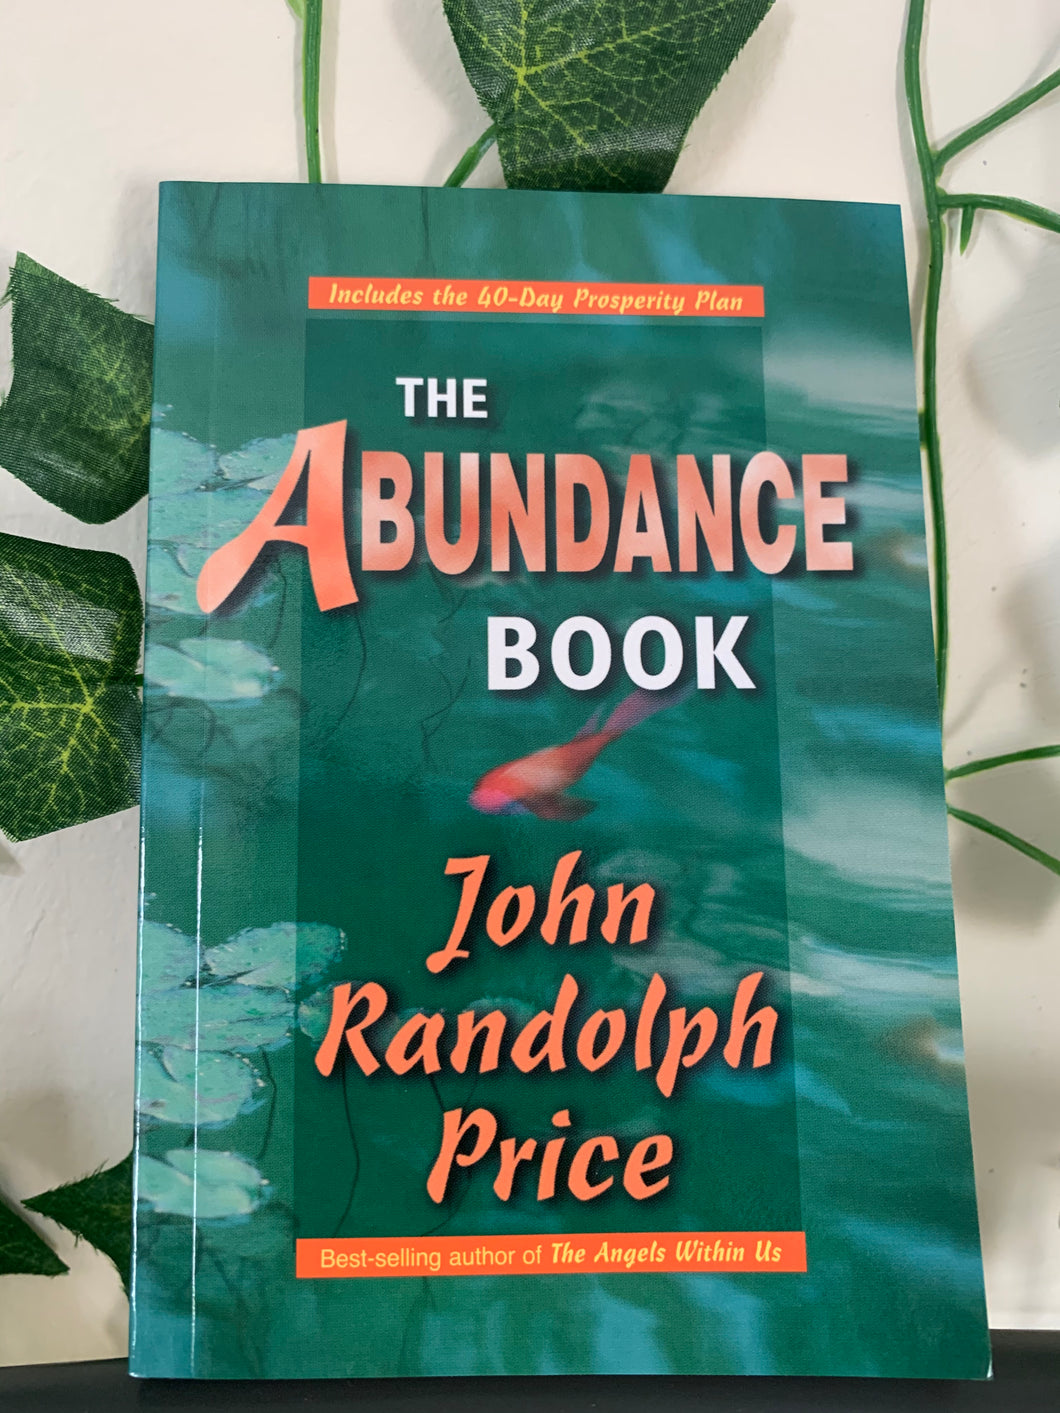 The Abundance Book by John Randolph Price